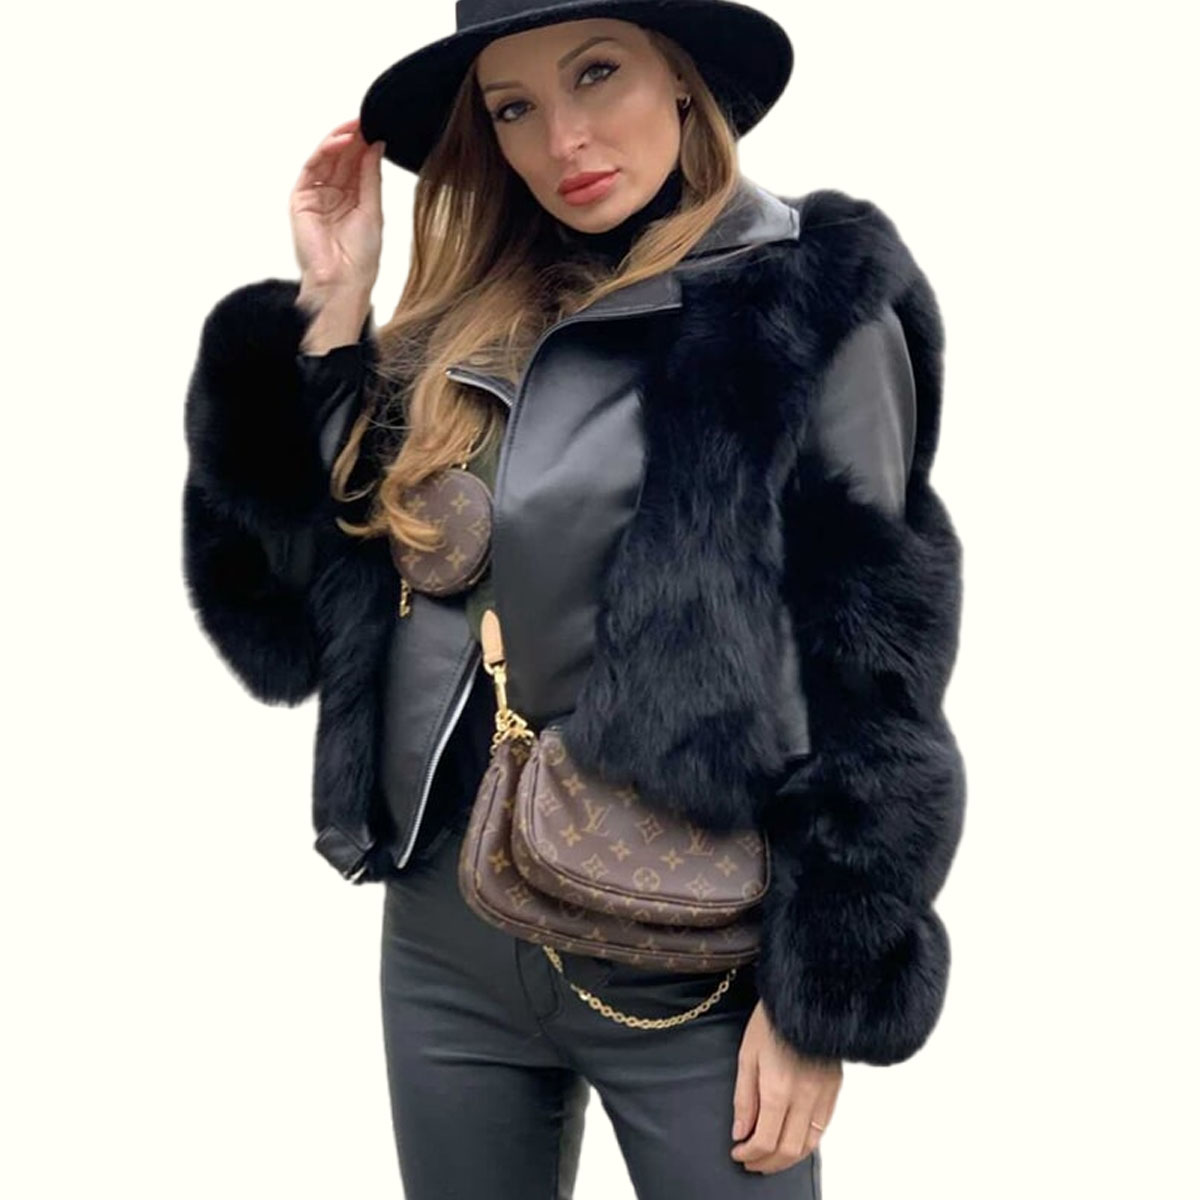 Black Leather Faux Fur Jacket Fashion modeling